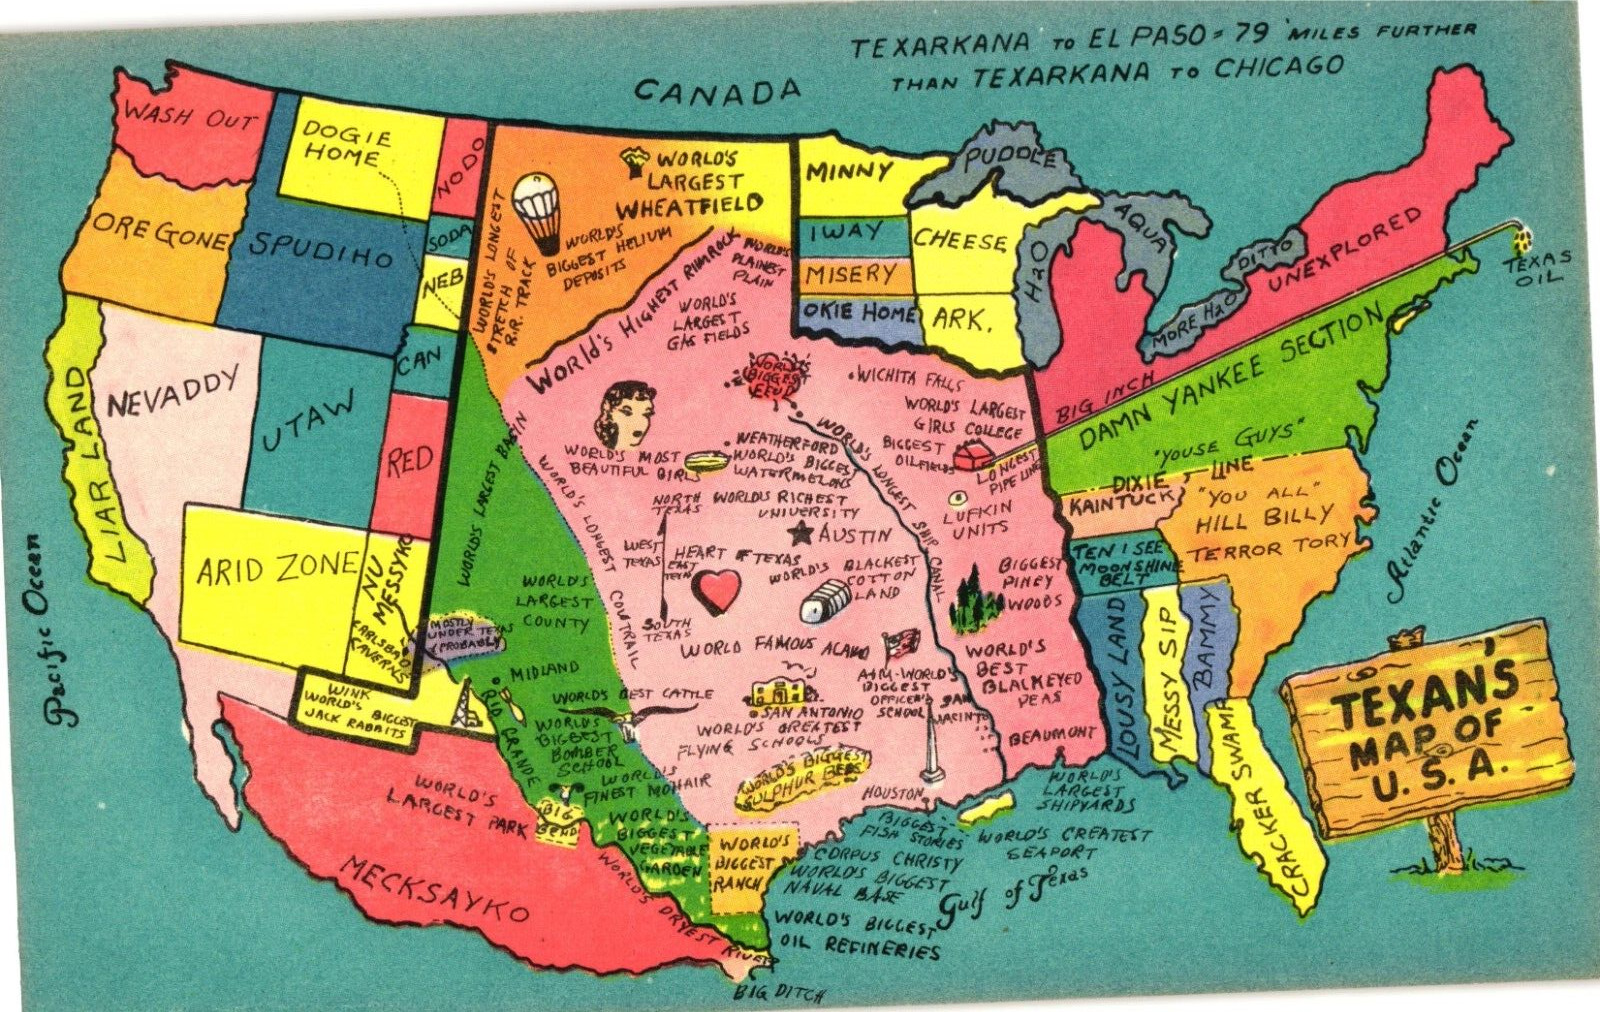 Humor Texans Map of U.S.A. Texas Vintage Postcard